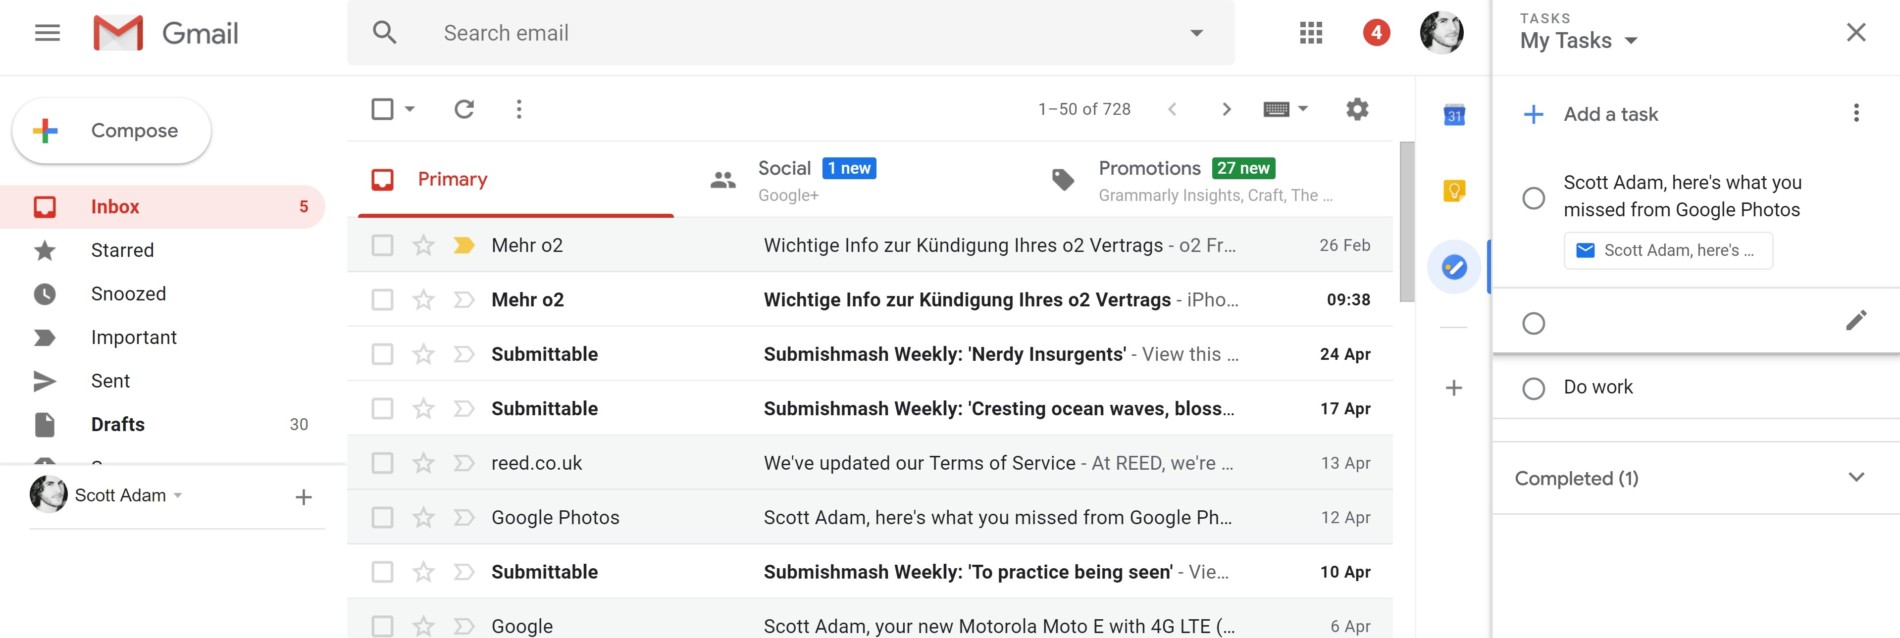 Google Gmail Task interface - new gmail